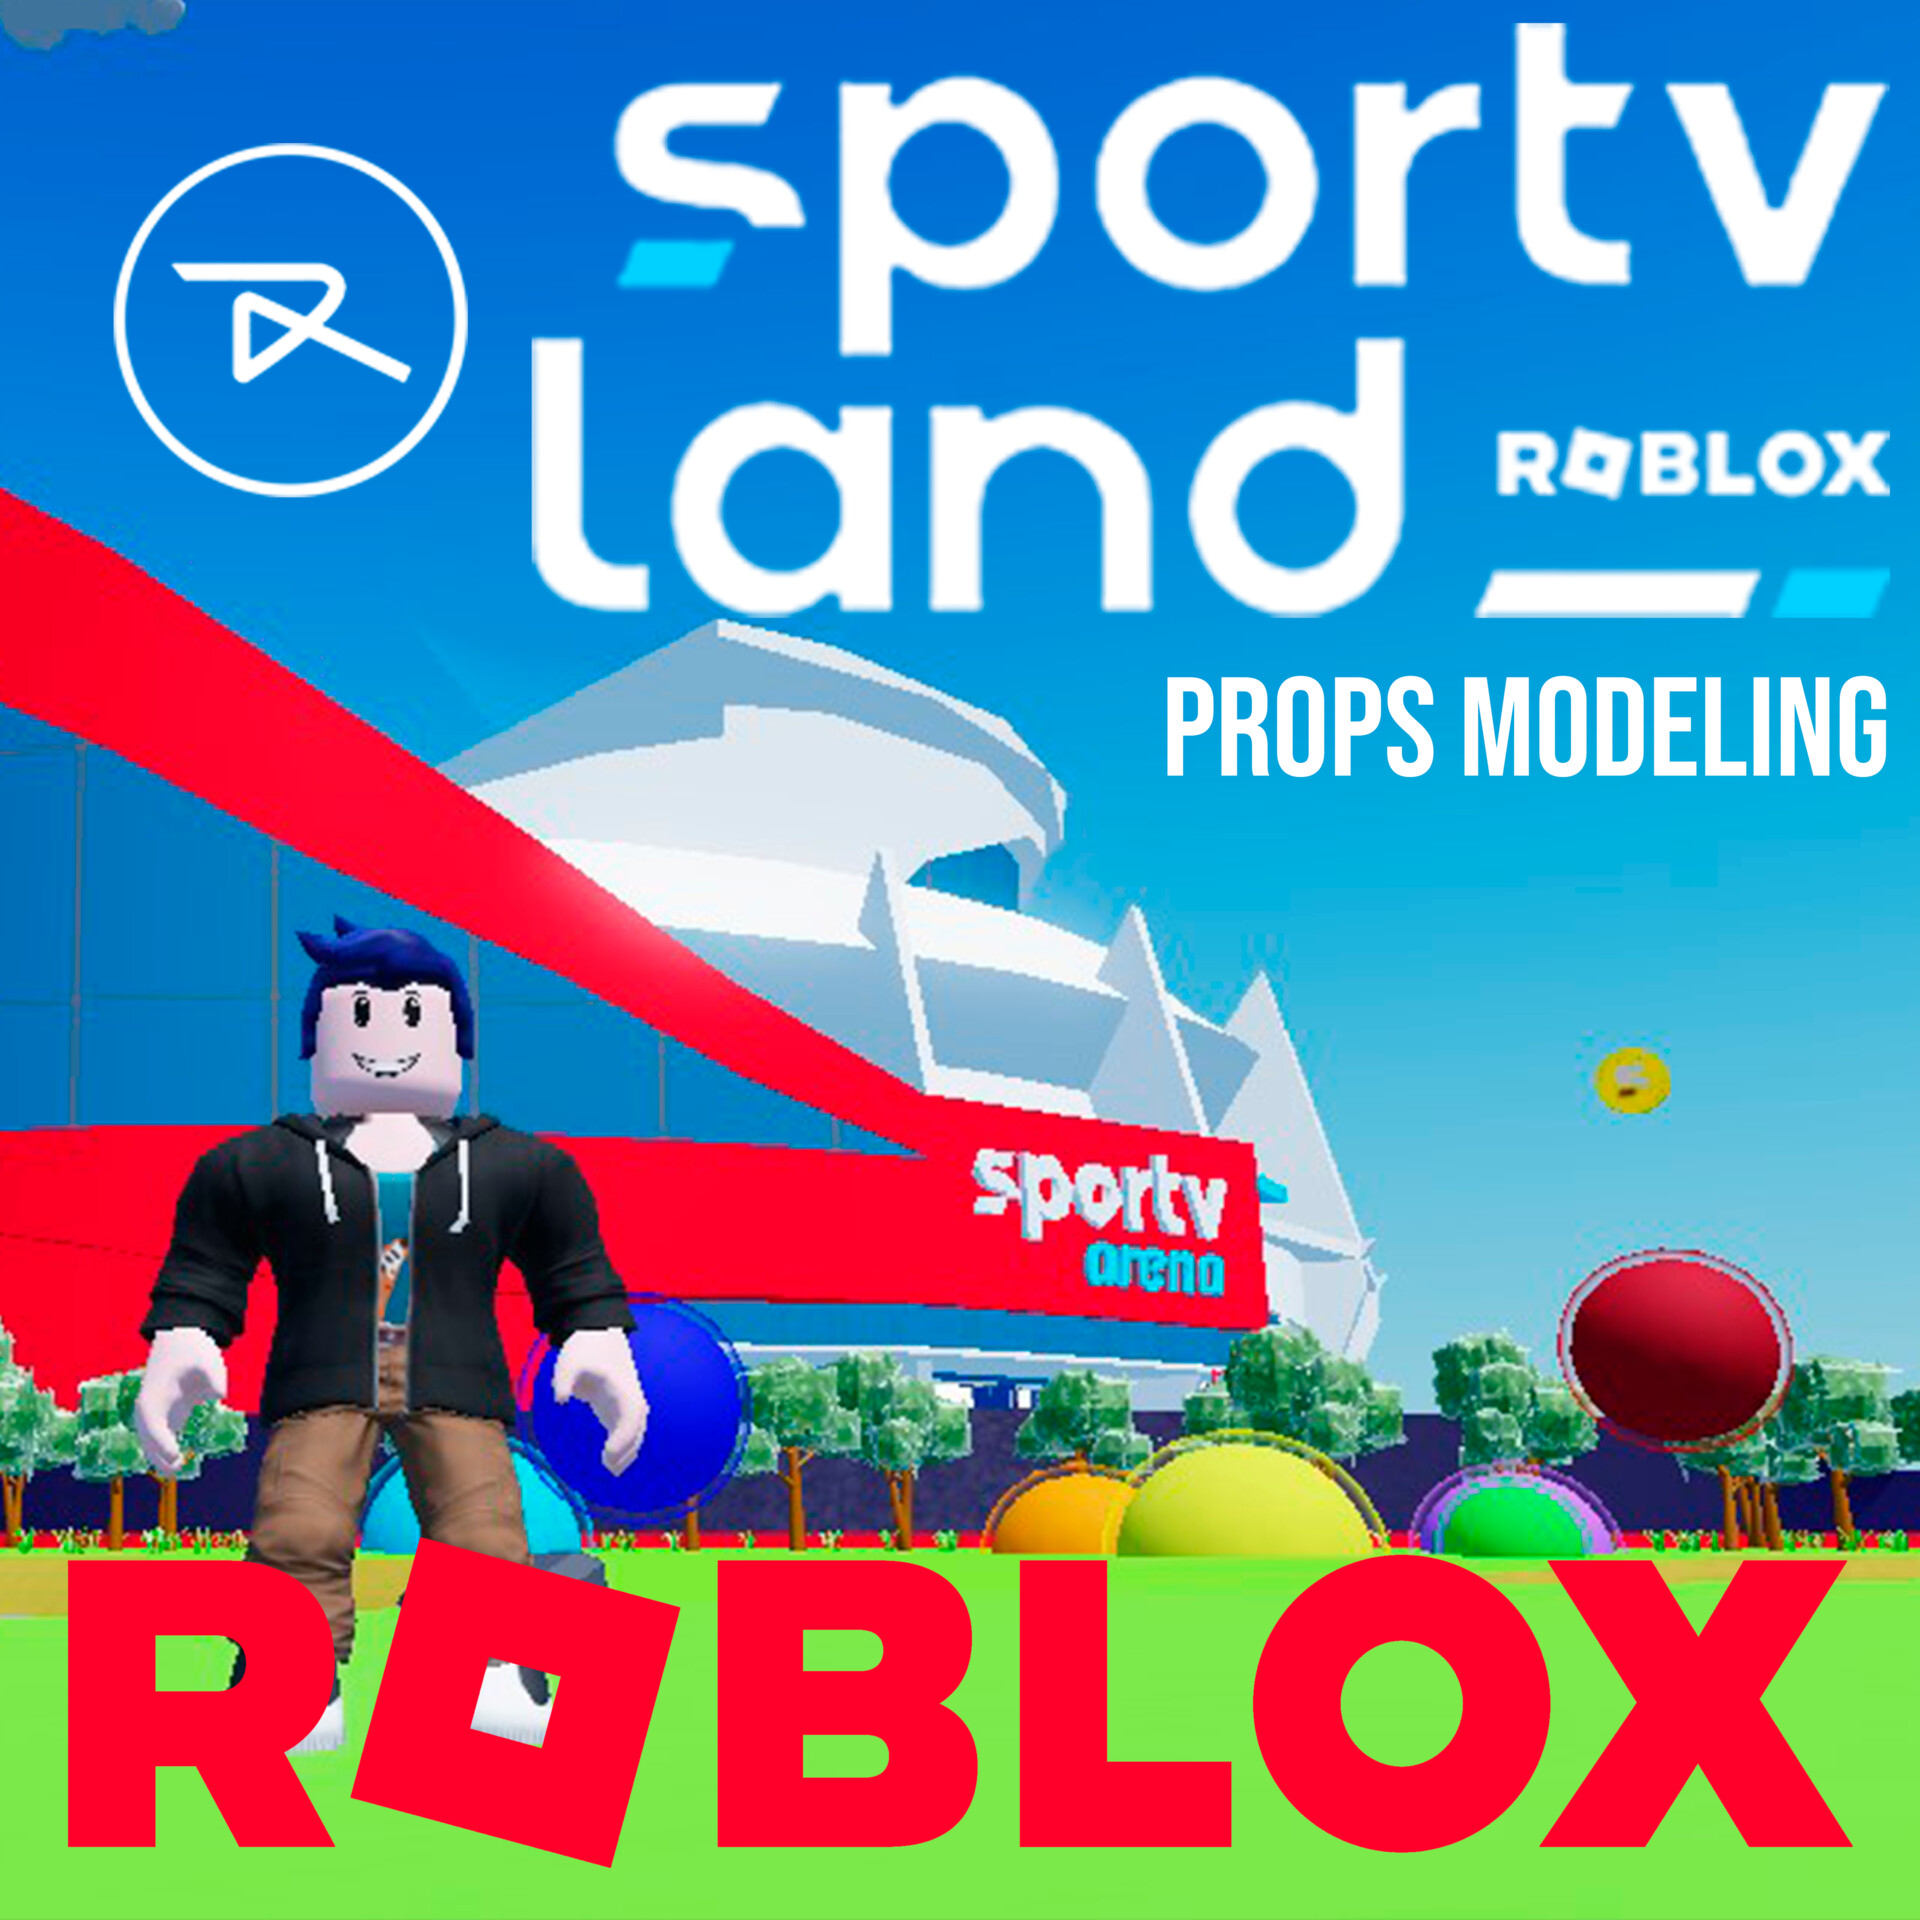 ArtStation - ROBLOX 'SporTV LAND' - Props